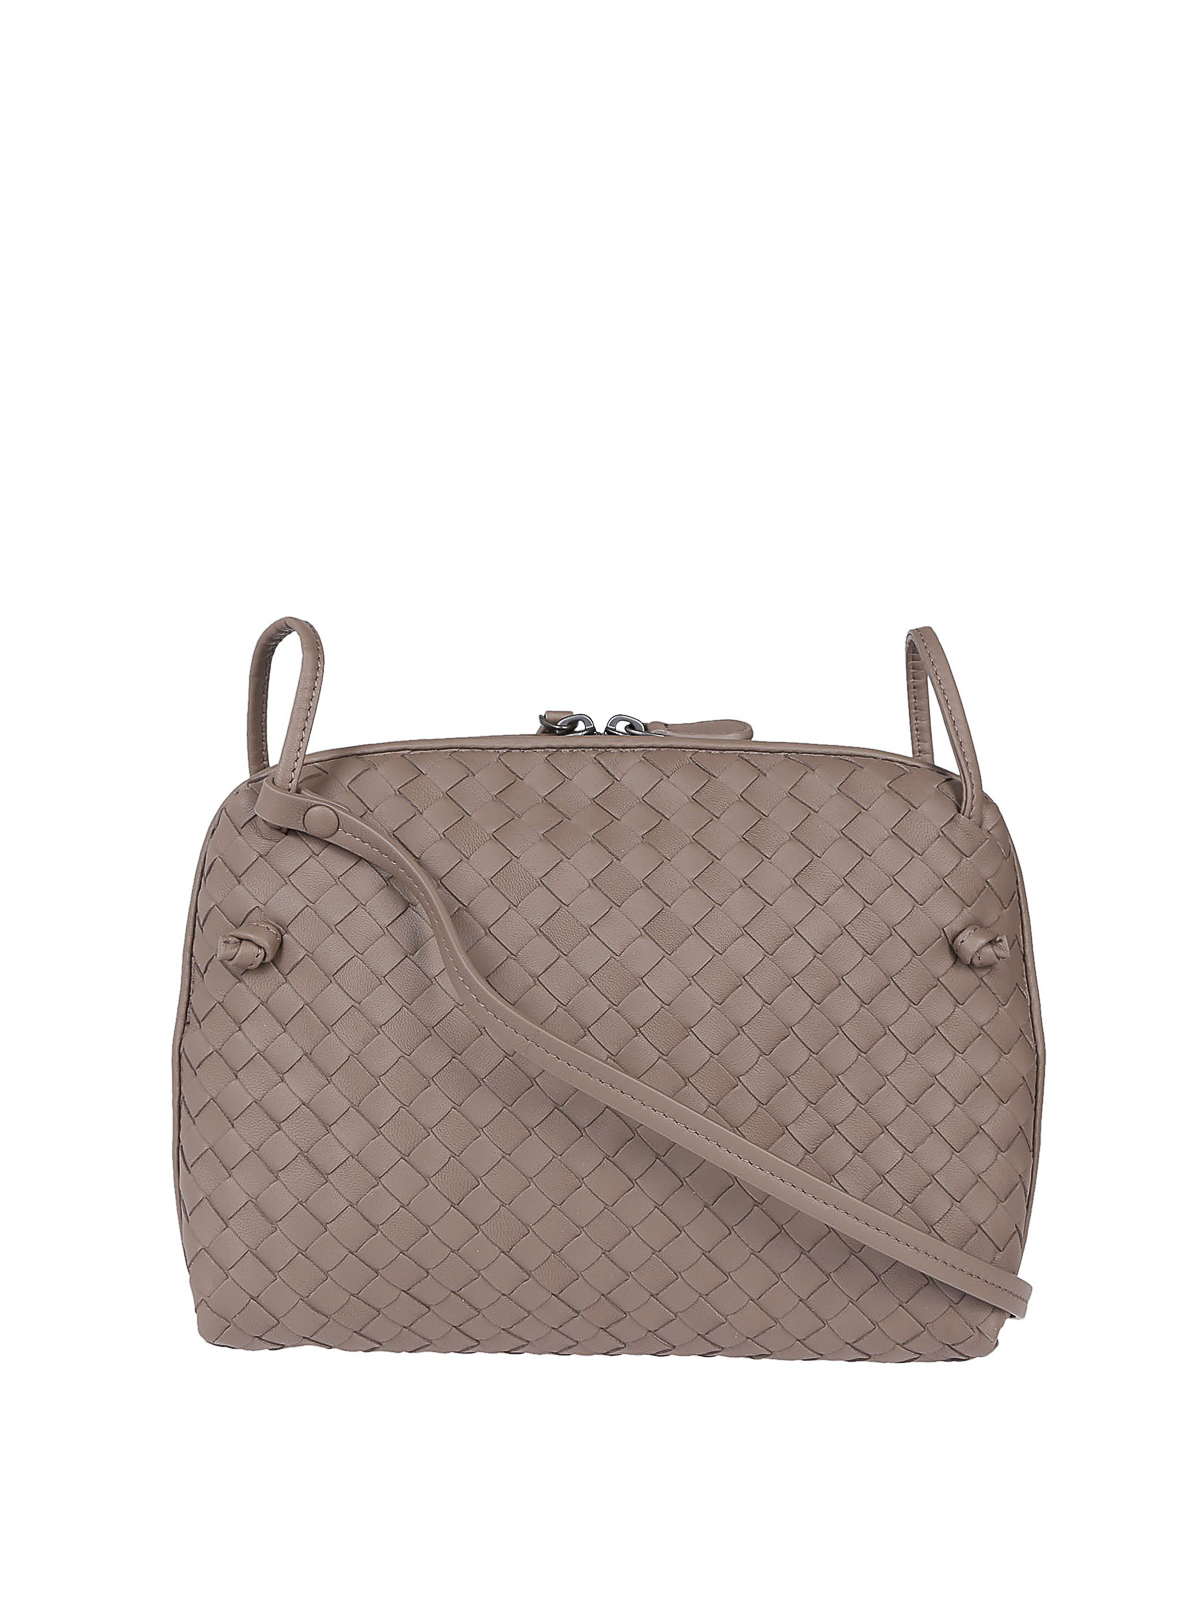 Bottega Veneta Nodini Leather Handbag